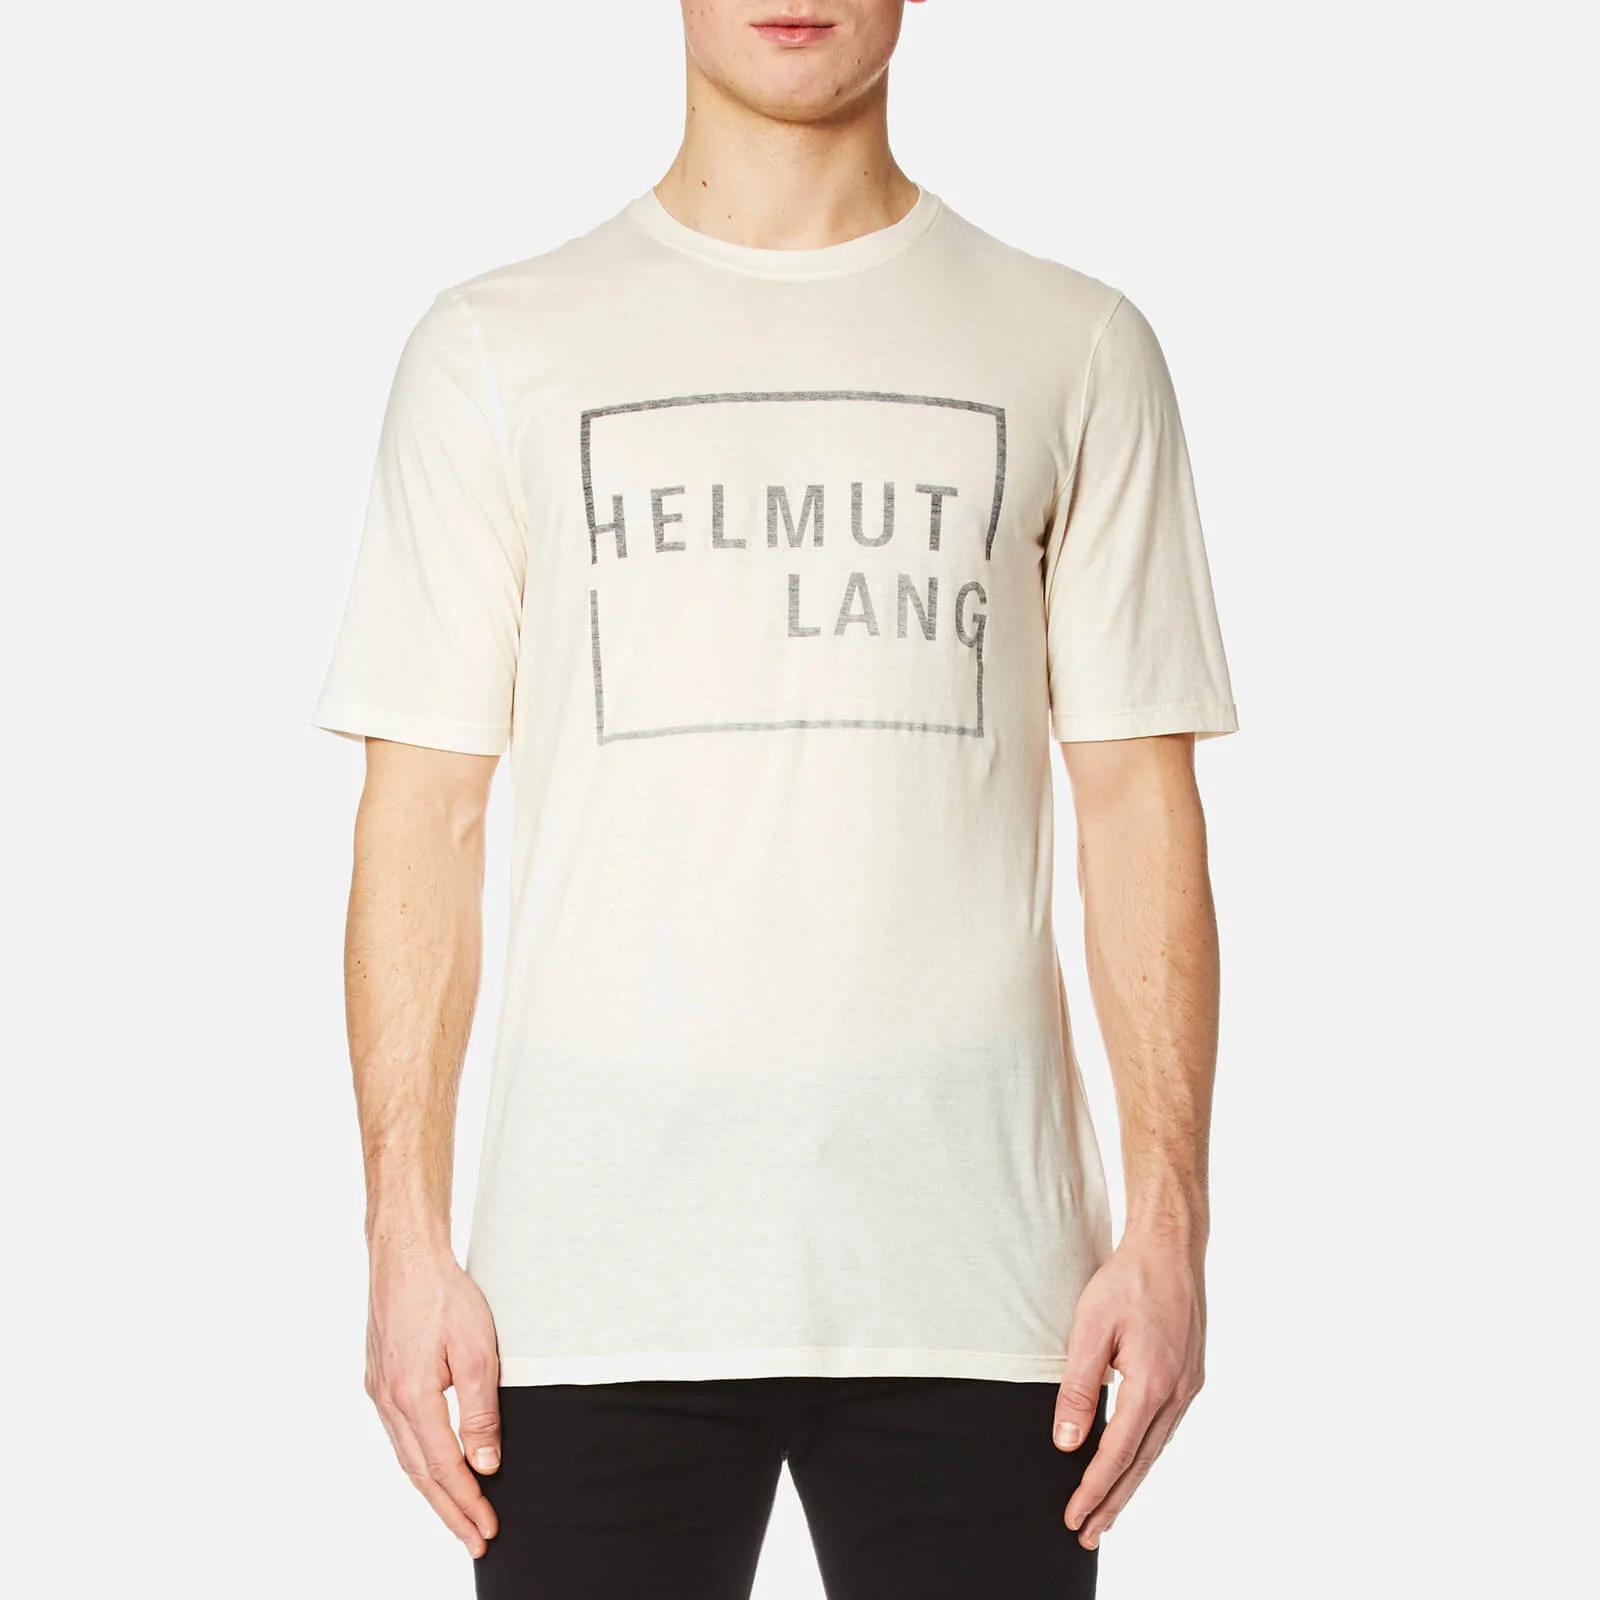 Helmut Lang Men's Square Logo T-Shirt - Cream Image 1